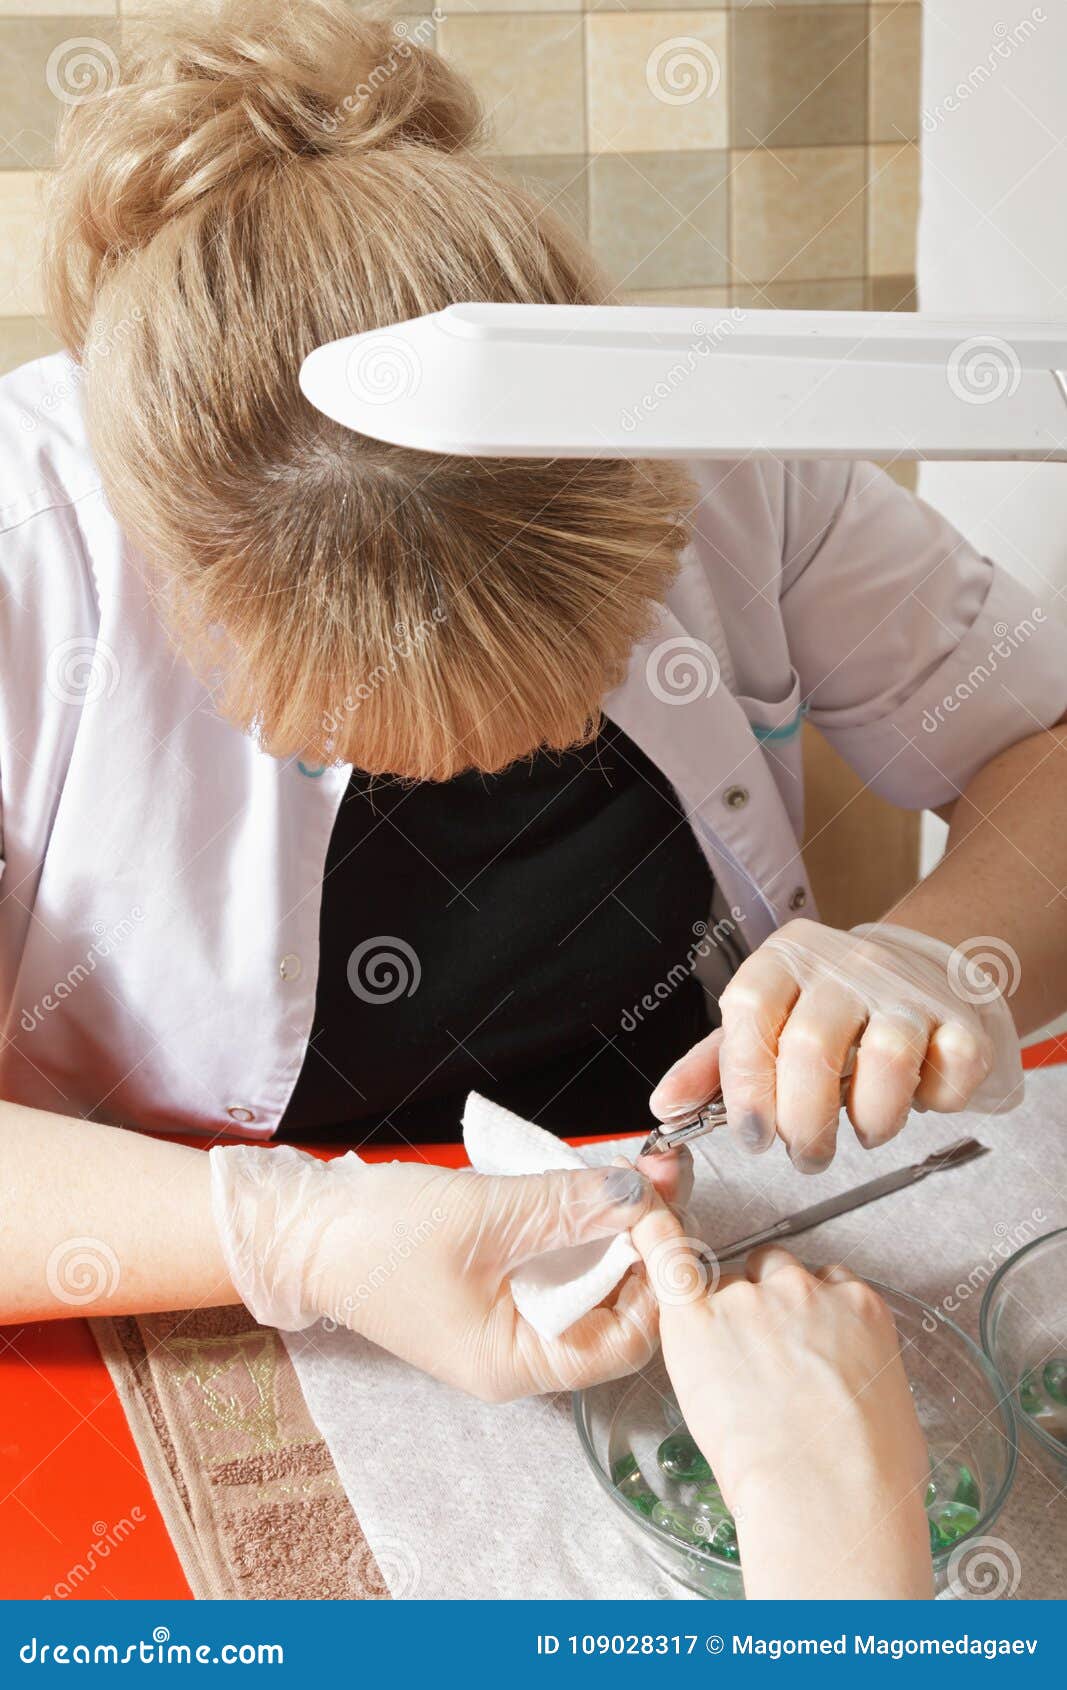 manicurist removing cuticles